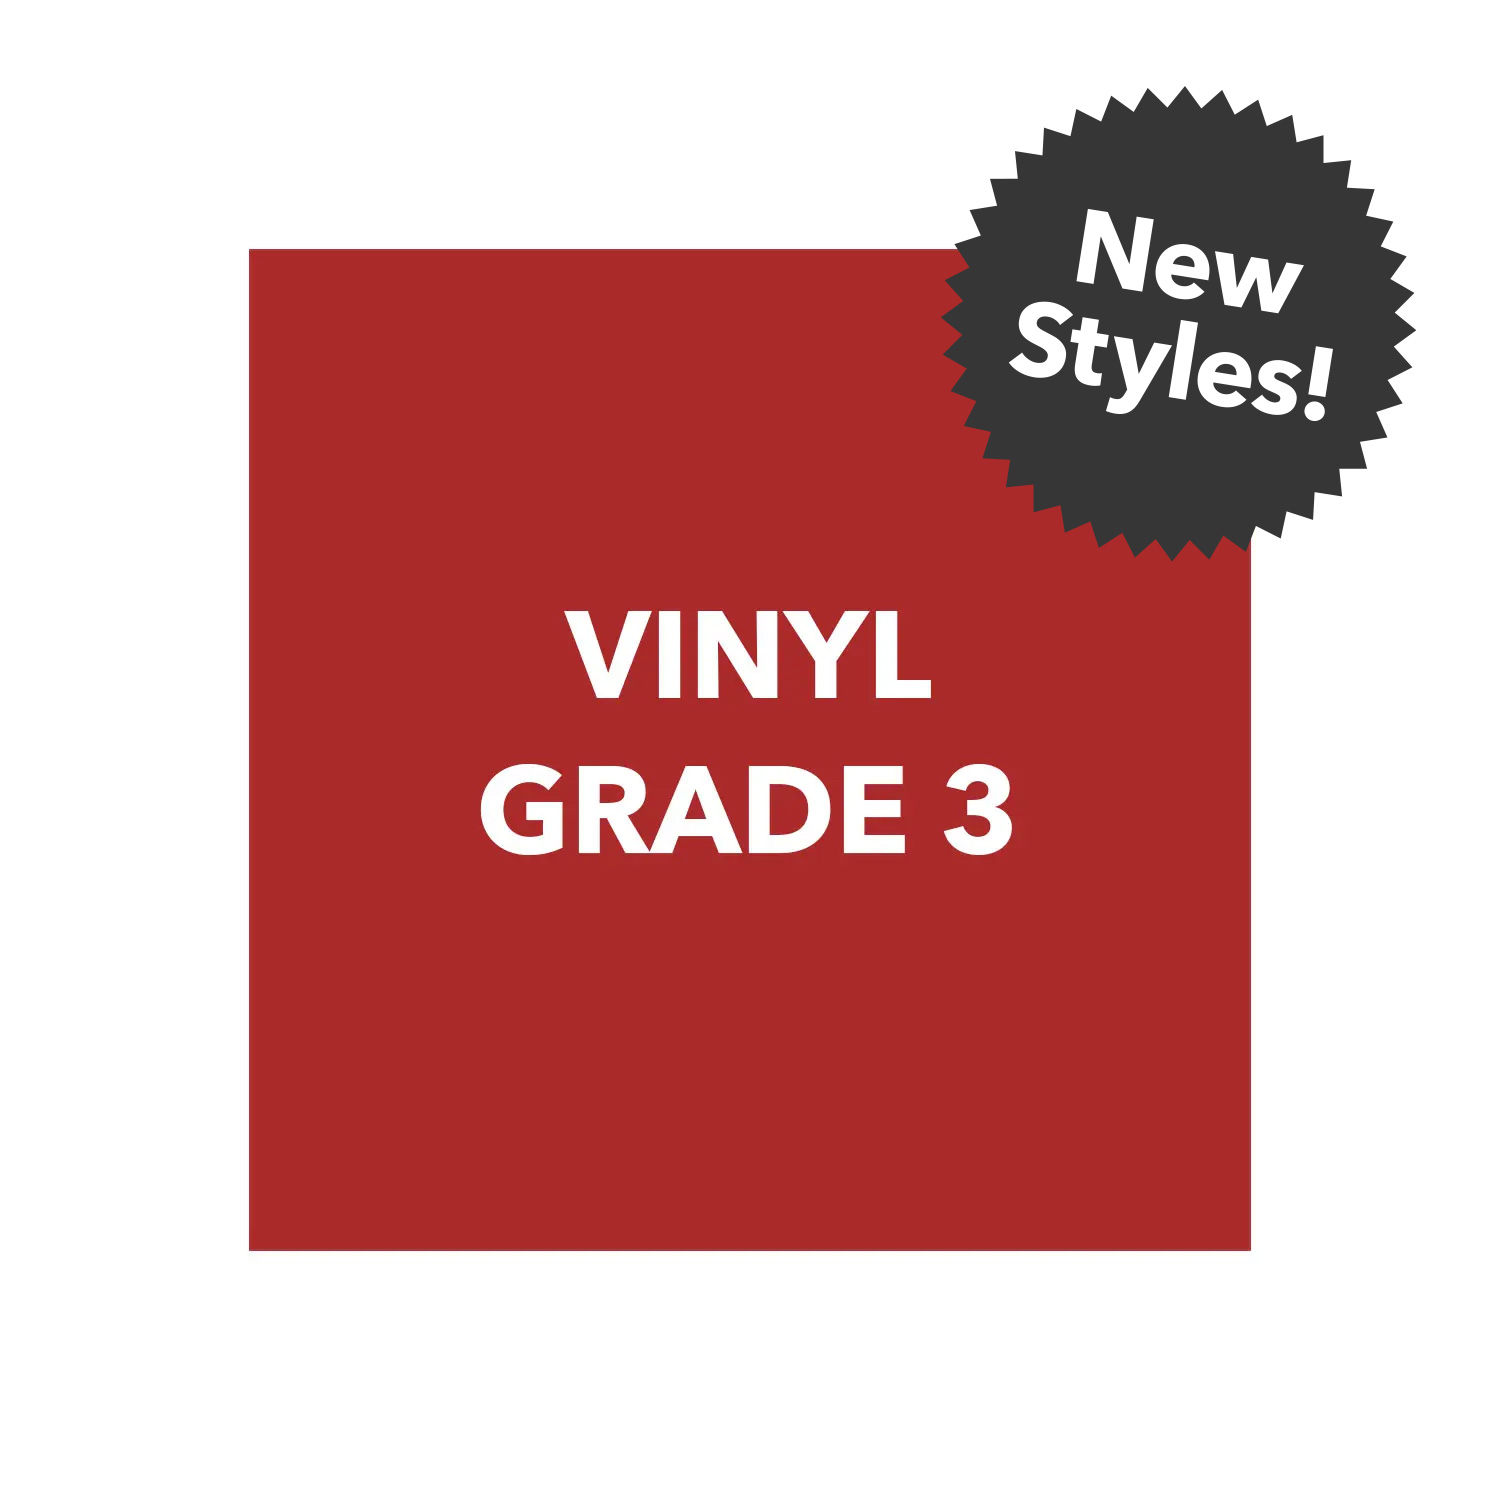 Vinyl Grade 3 - New Styles